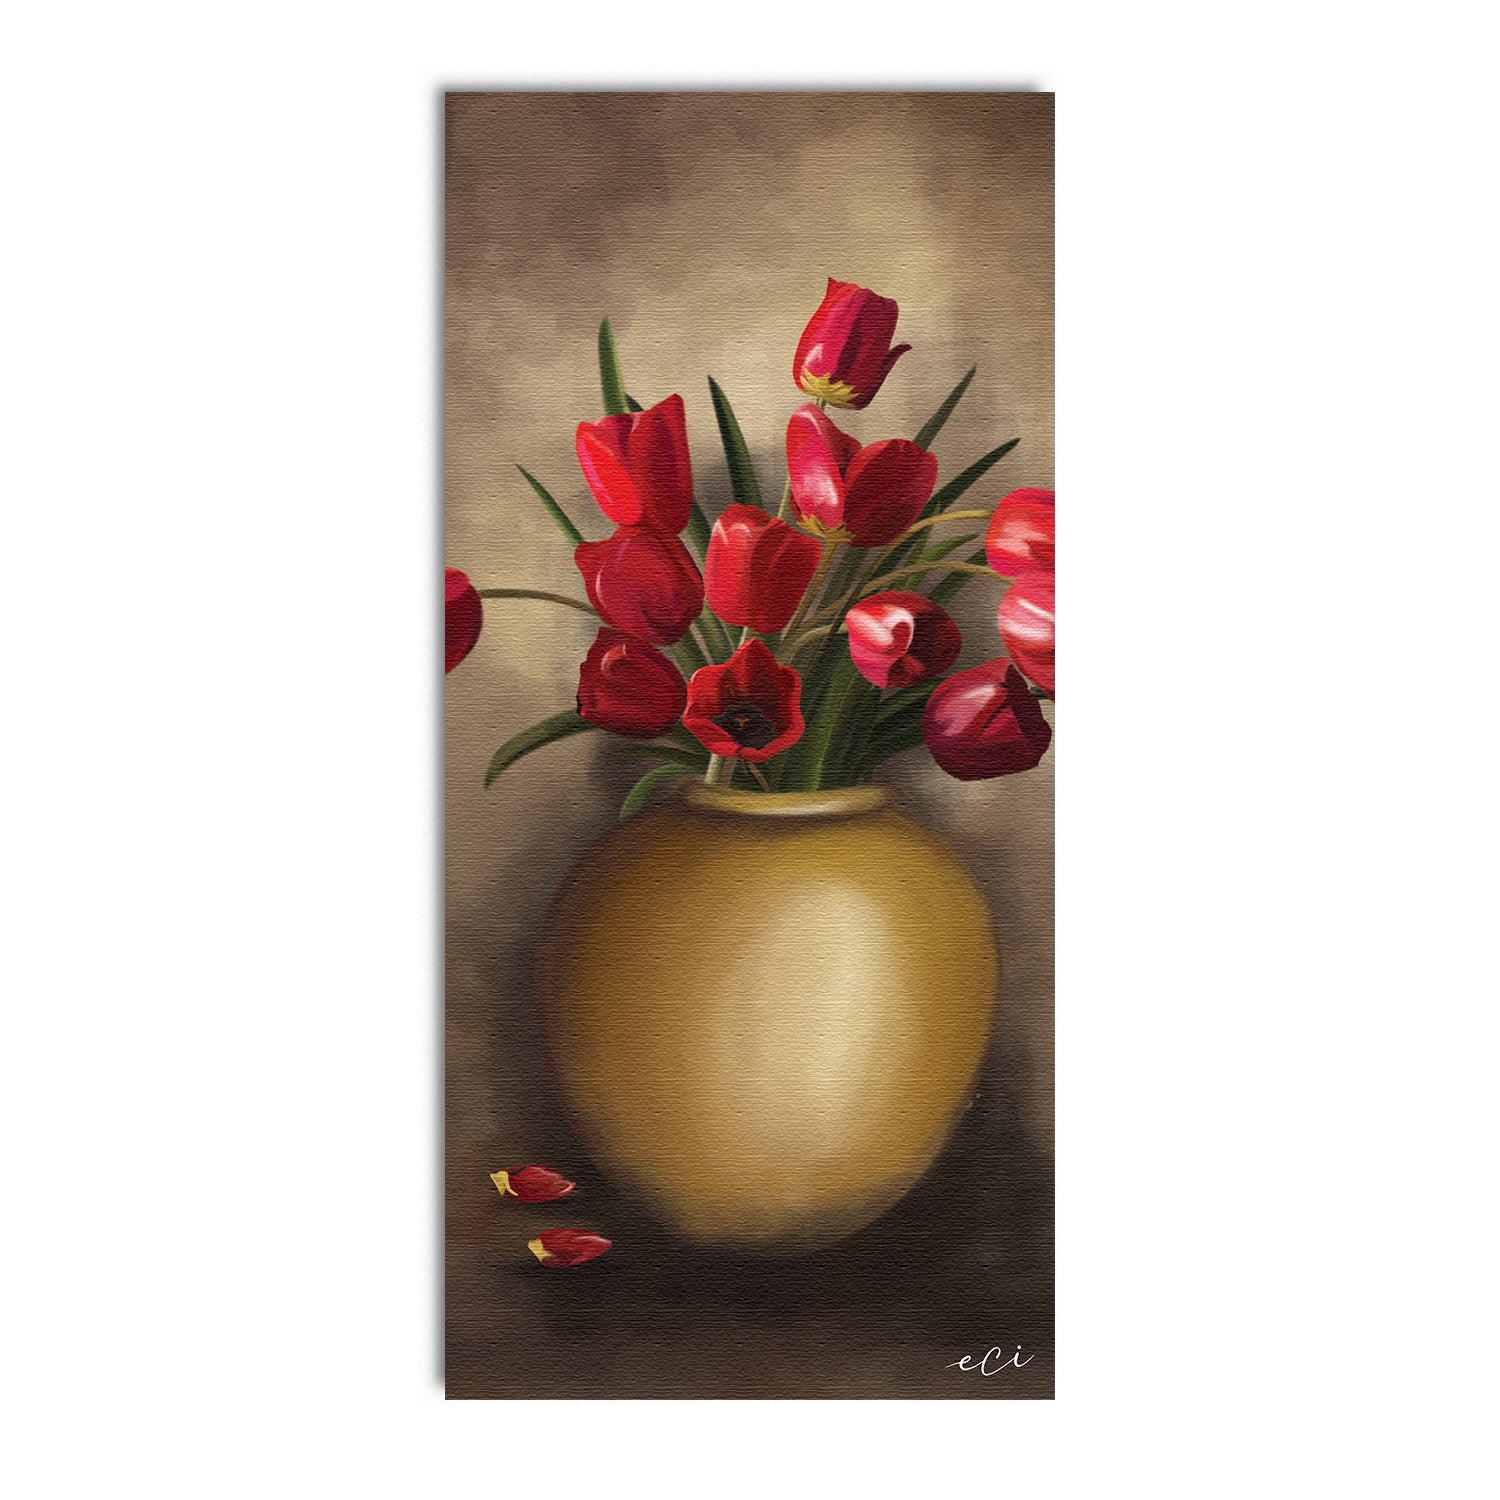 Beautiful Red Roses Flower Vase Wall Painting Digital Printed Canvas Art